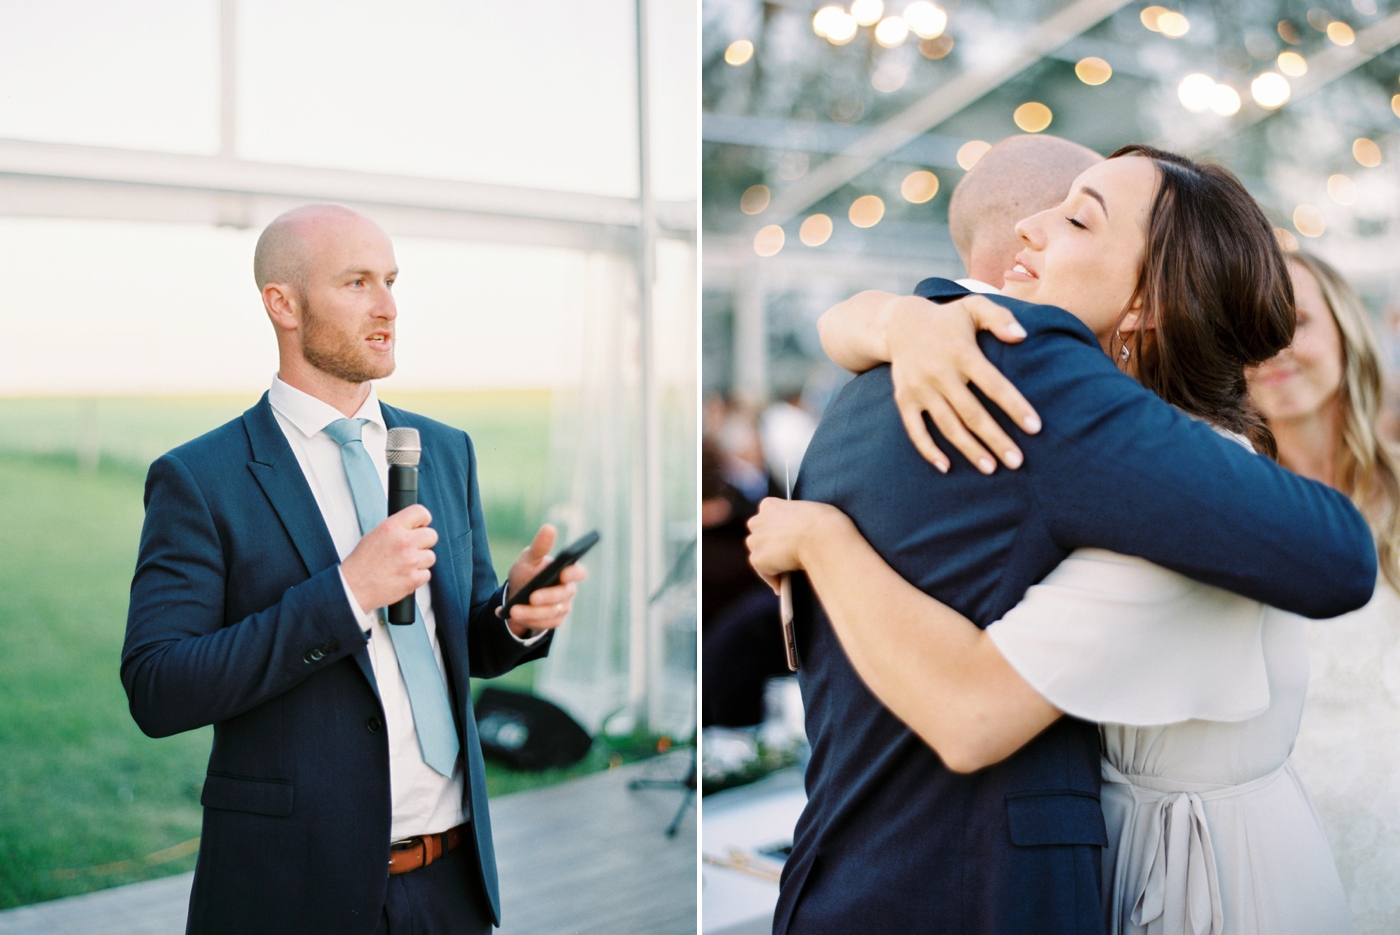 Calgary wedding photographers | The Gathered Farm Wedding | Justine milton fine art film photographer | wedding reception speaches candids